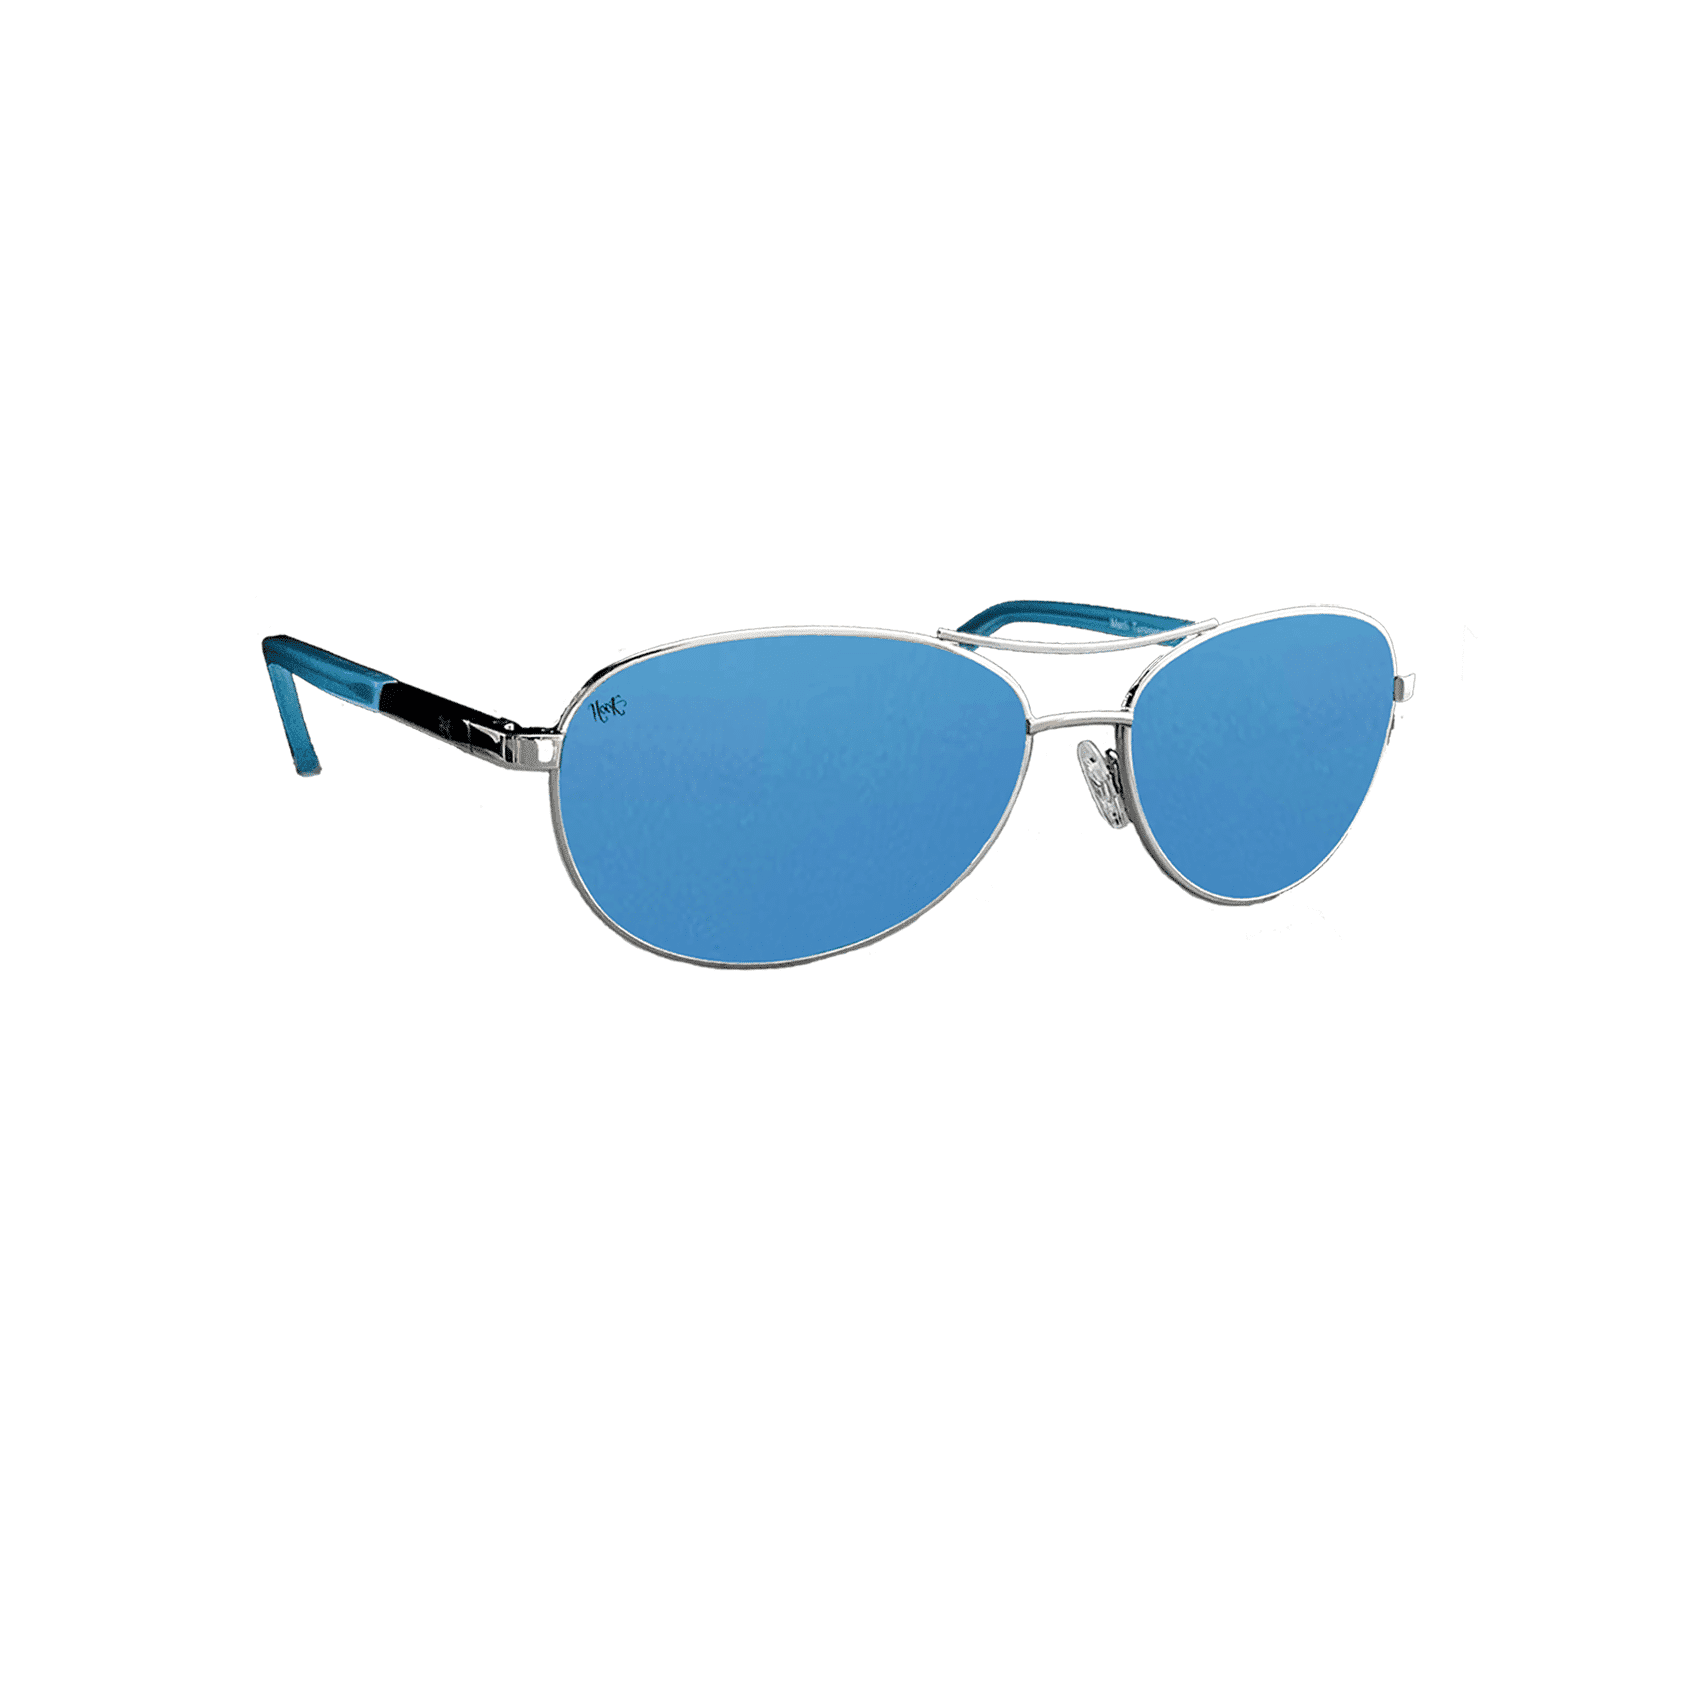 MARLI Aviator Sunglasses for all Occasions | Polarized Sunglasses